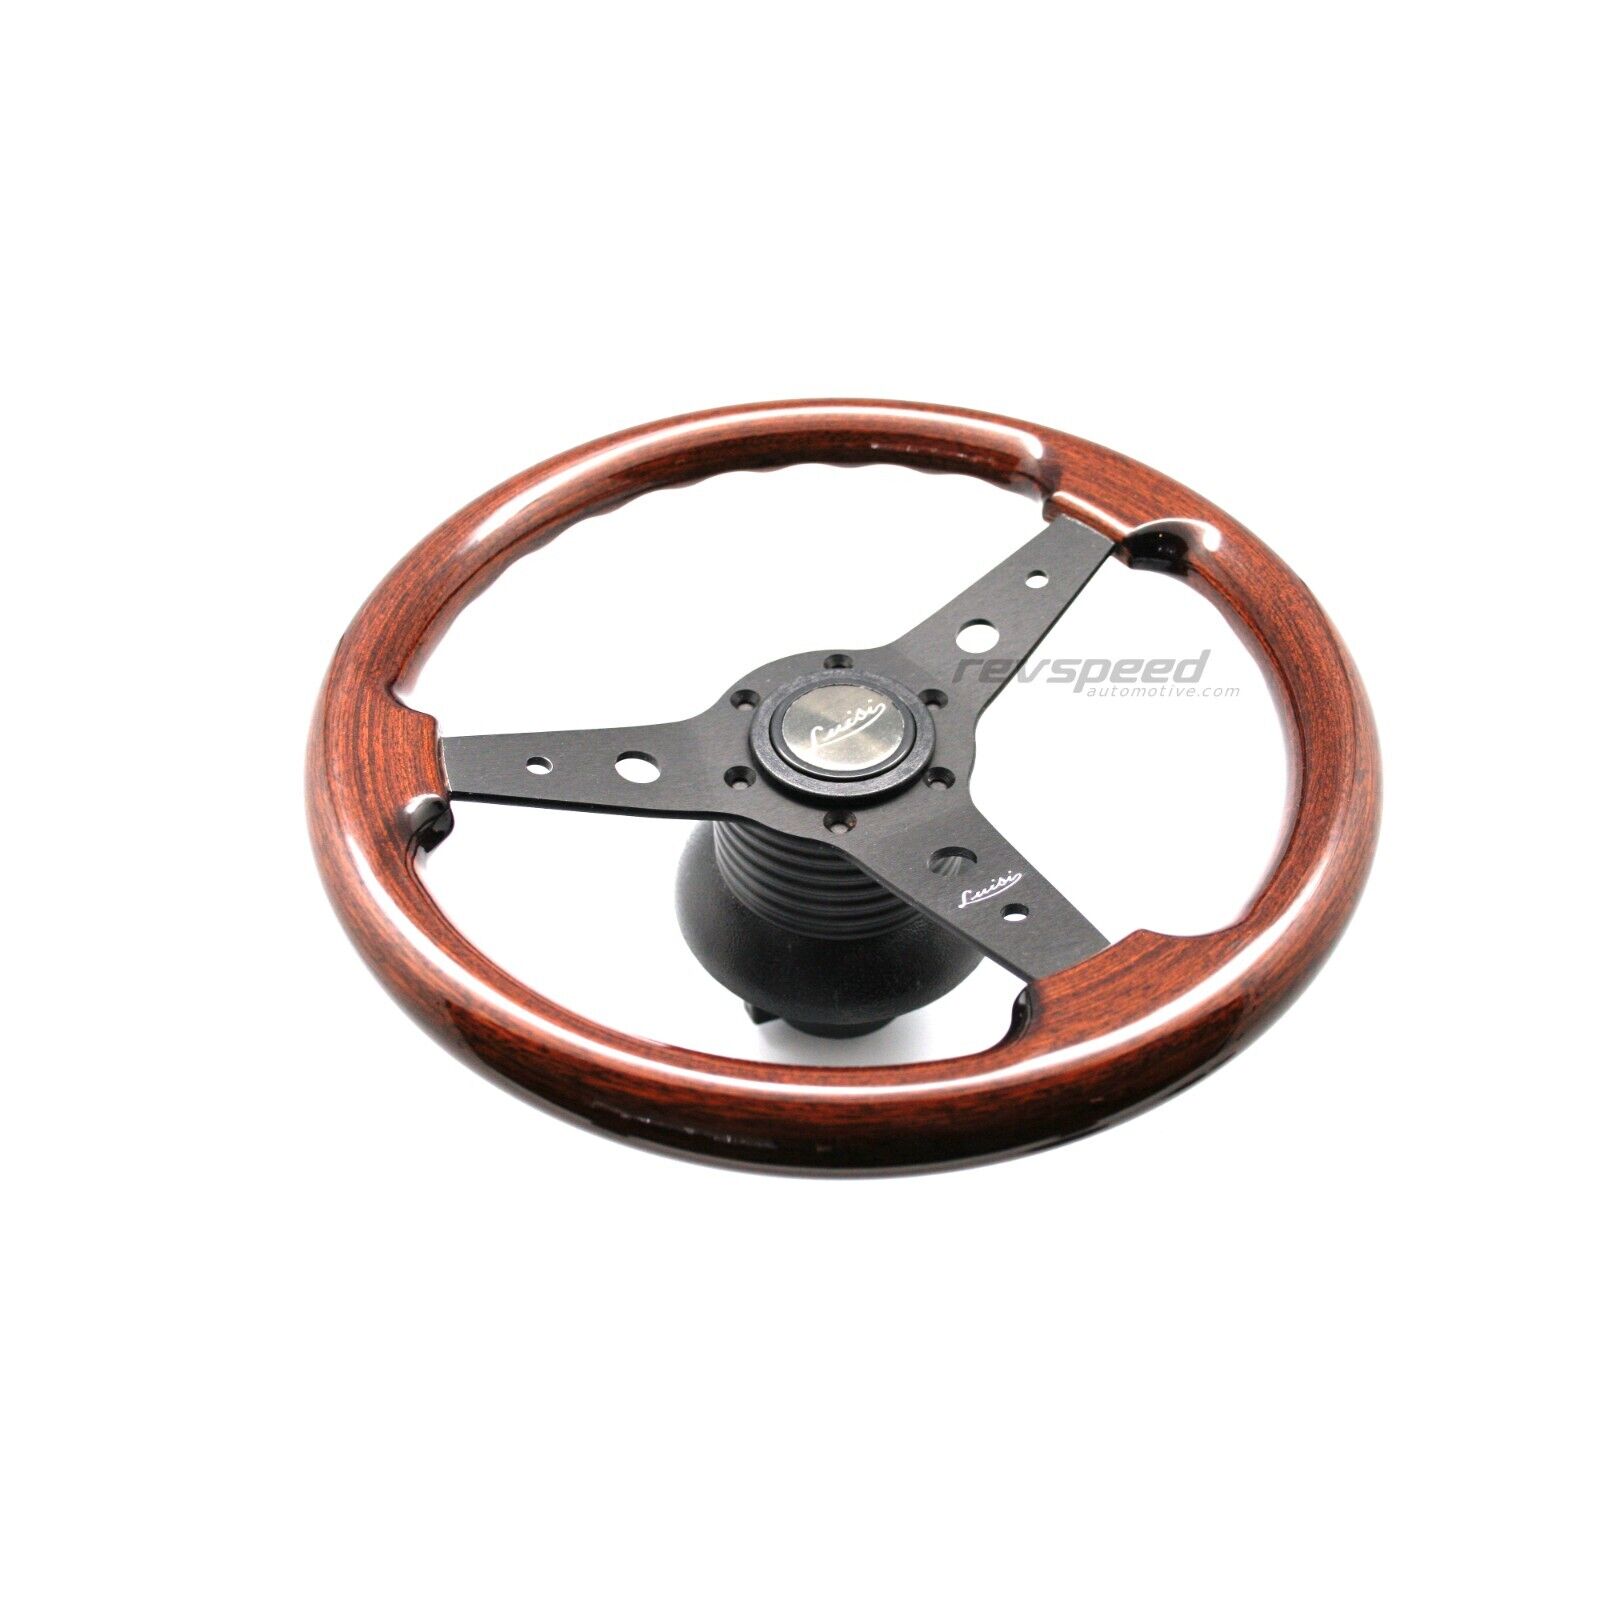 De Tomaso Pantera All Years Luisi Italy Vintage Steering Wheel Montreal Mahogany